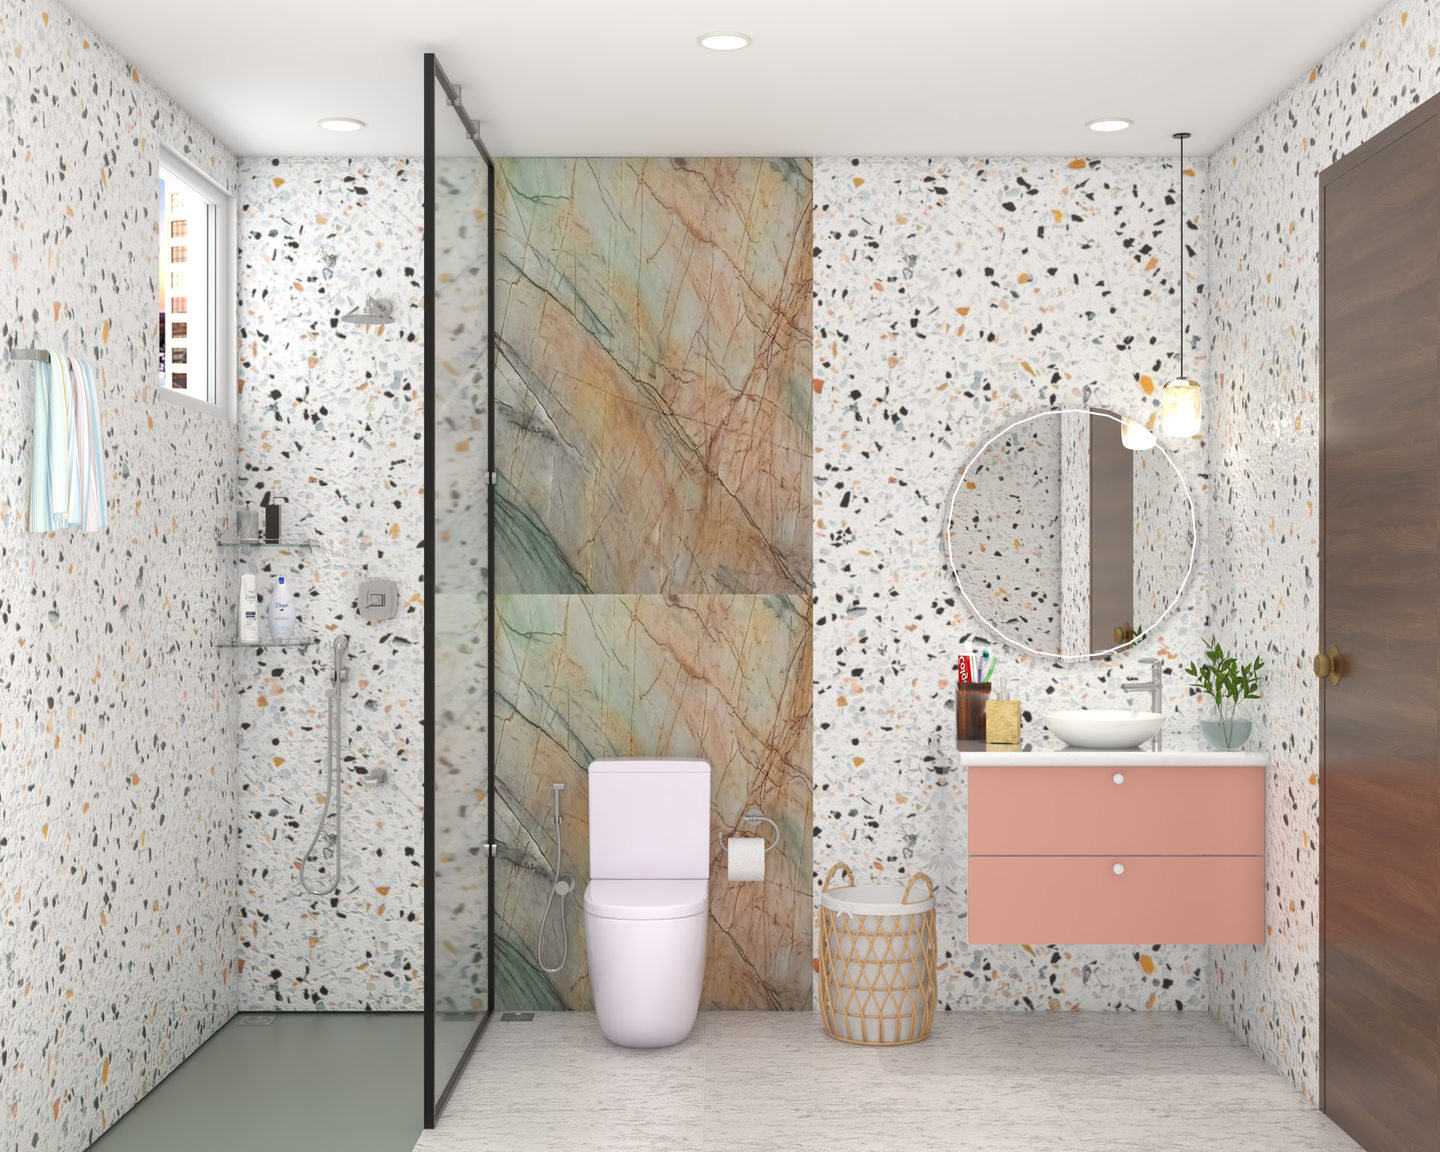 Cheerful-Fun Bathroom Design With Contemporary Interiors - Livspace